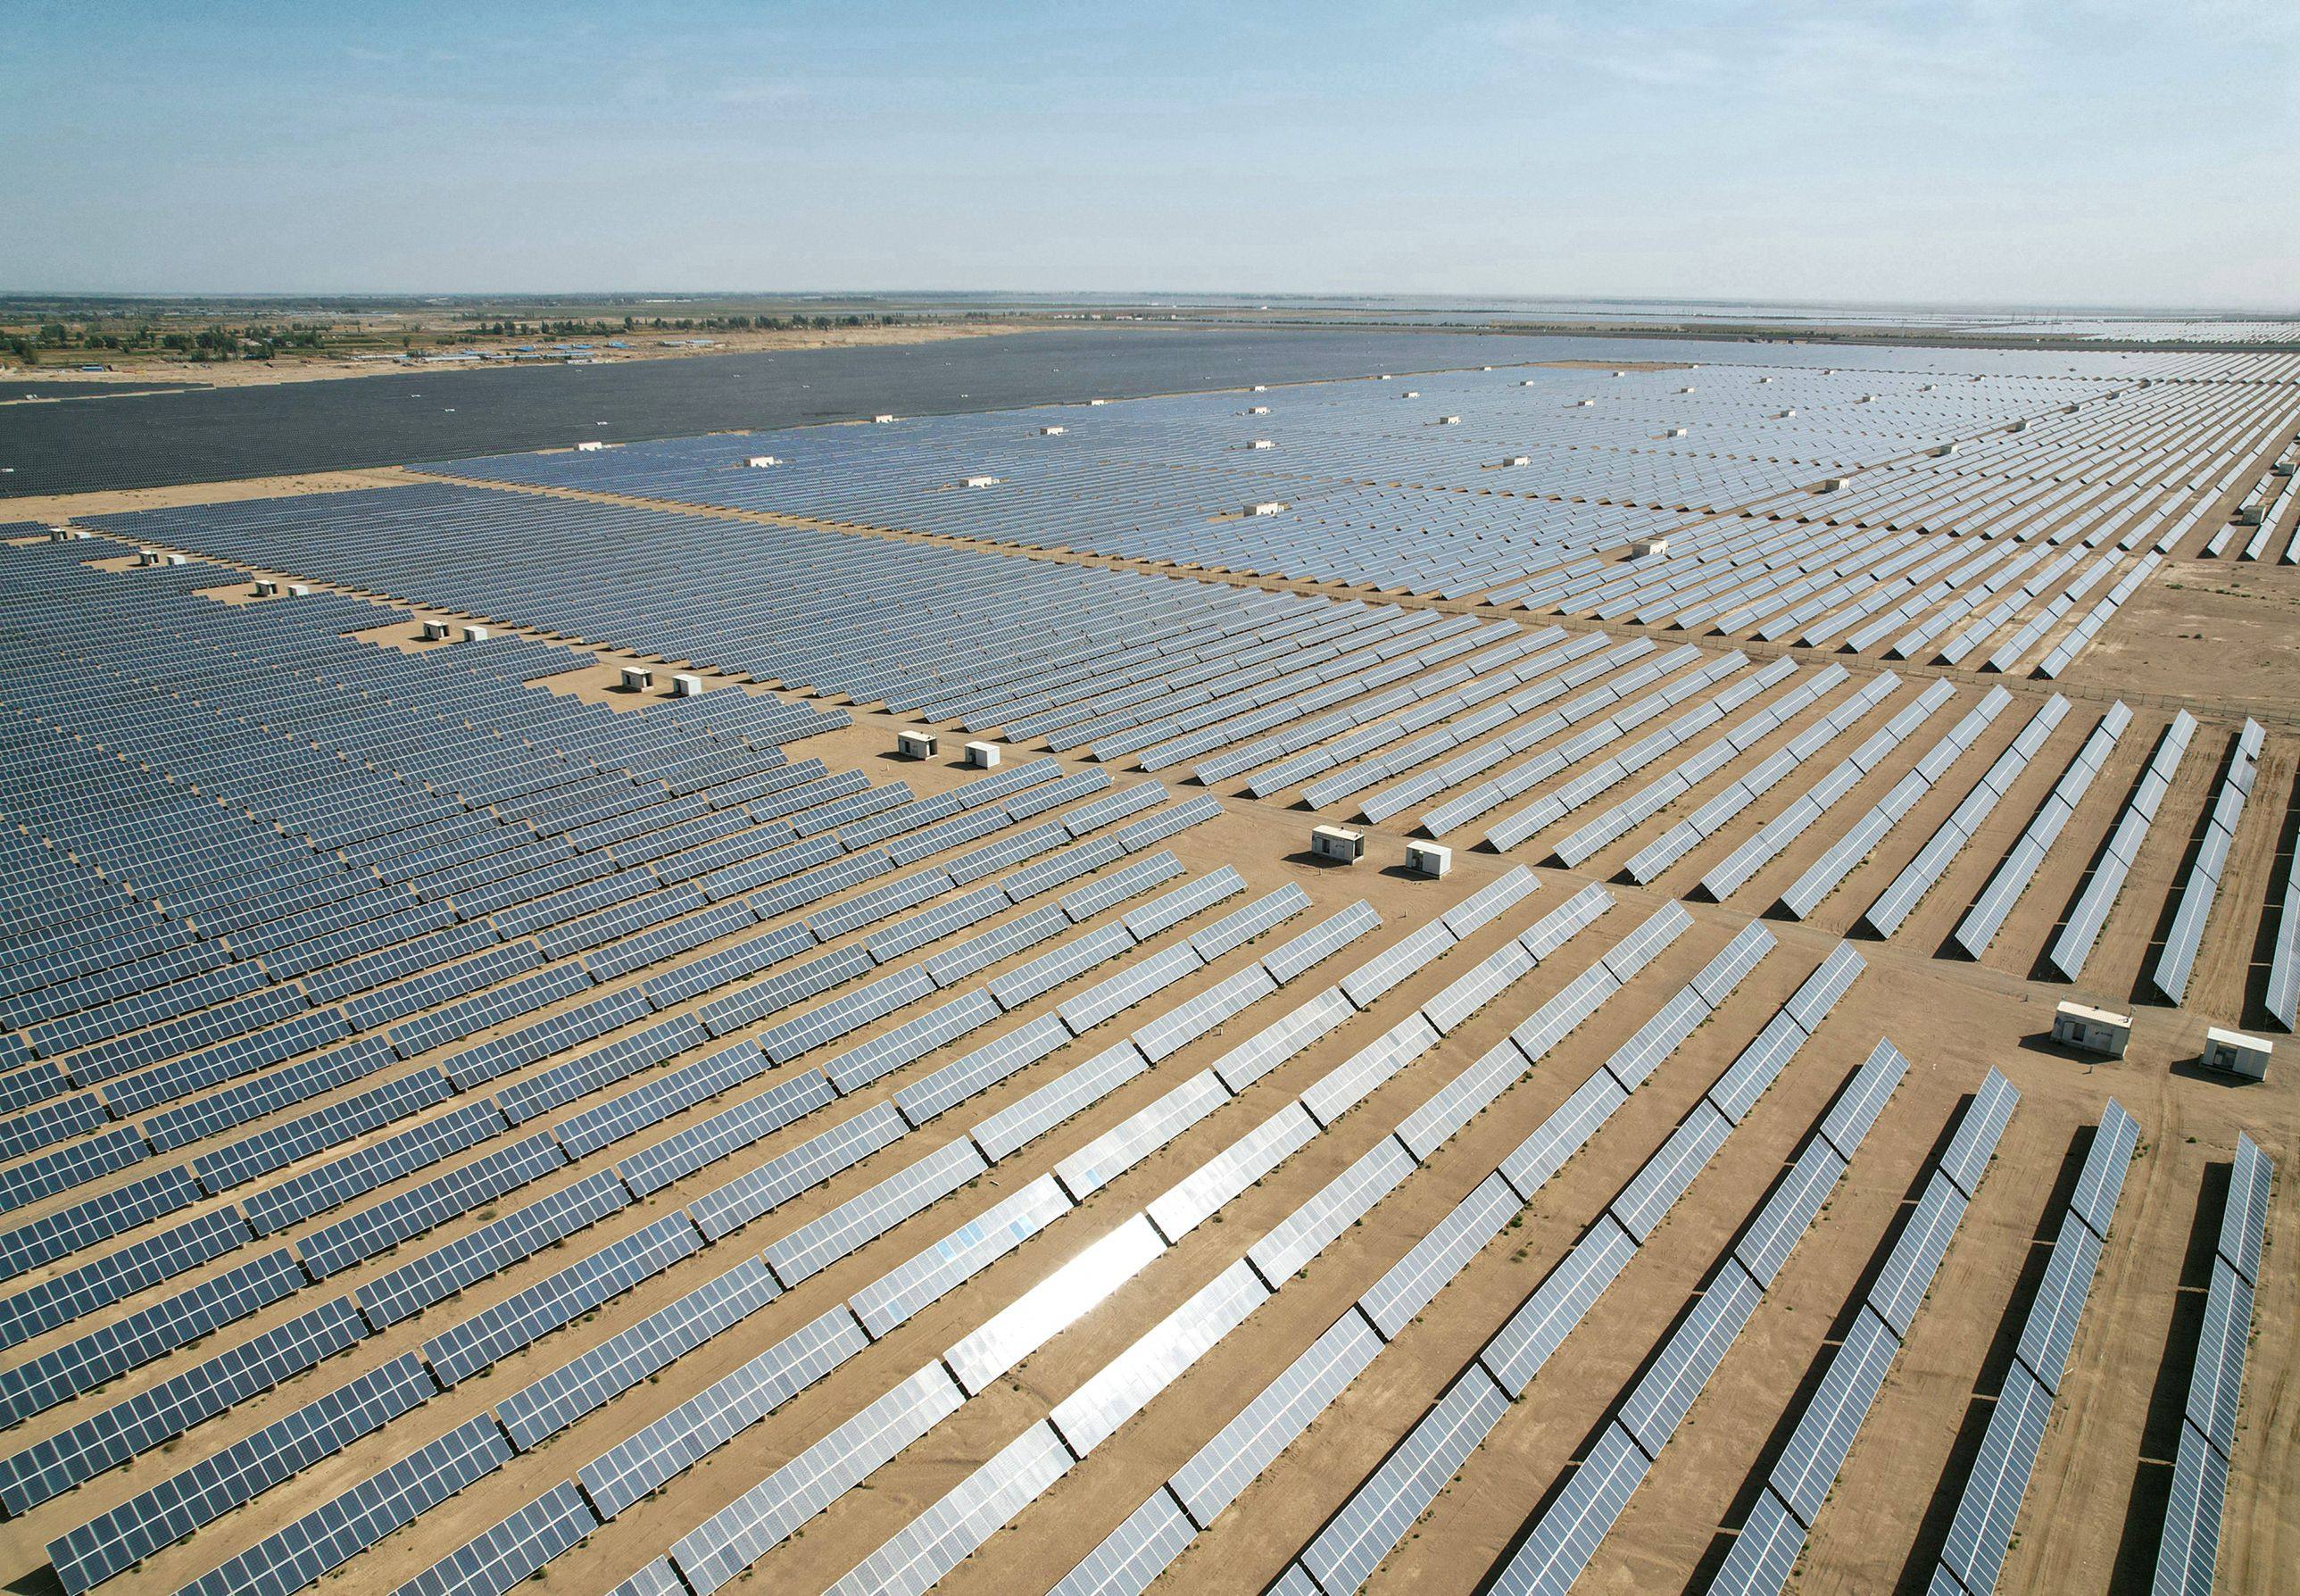 Solar panel installations in China’s desert region of Zhangye, Gansu province, show how Qatar can improve its solar energy efforts. Photo: AFP 
